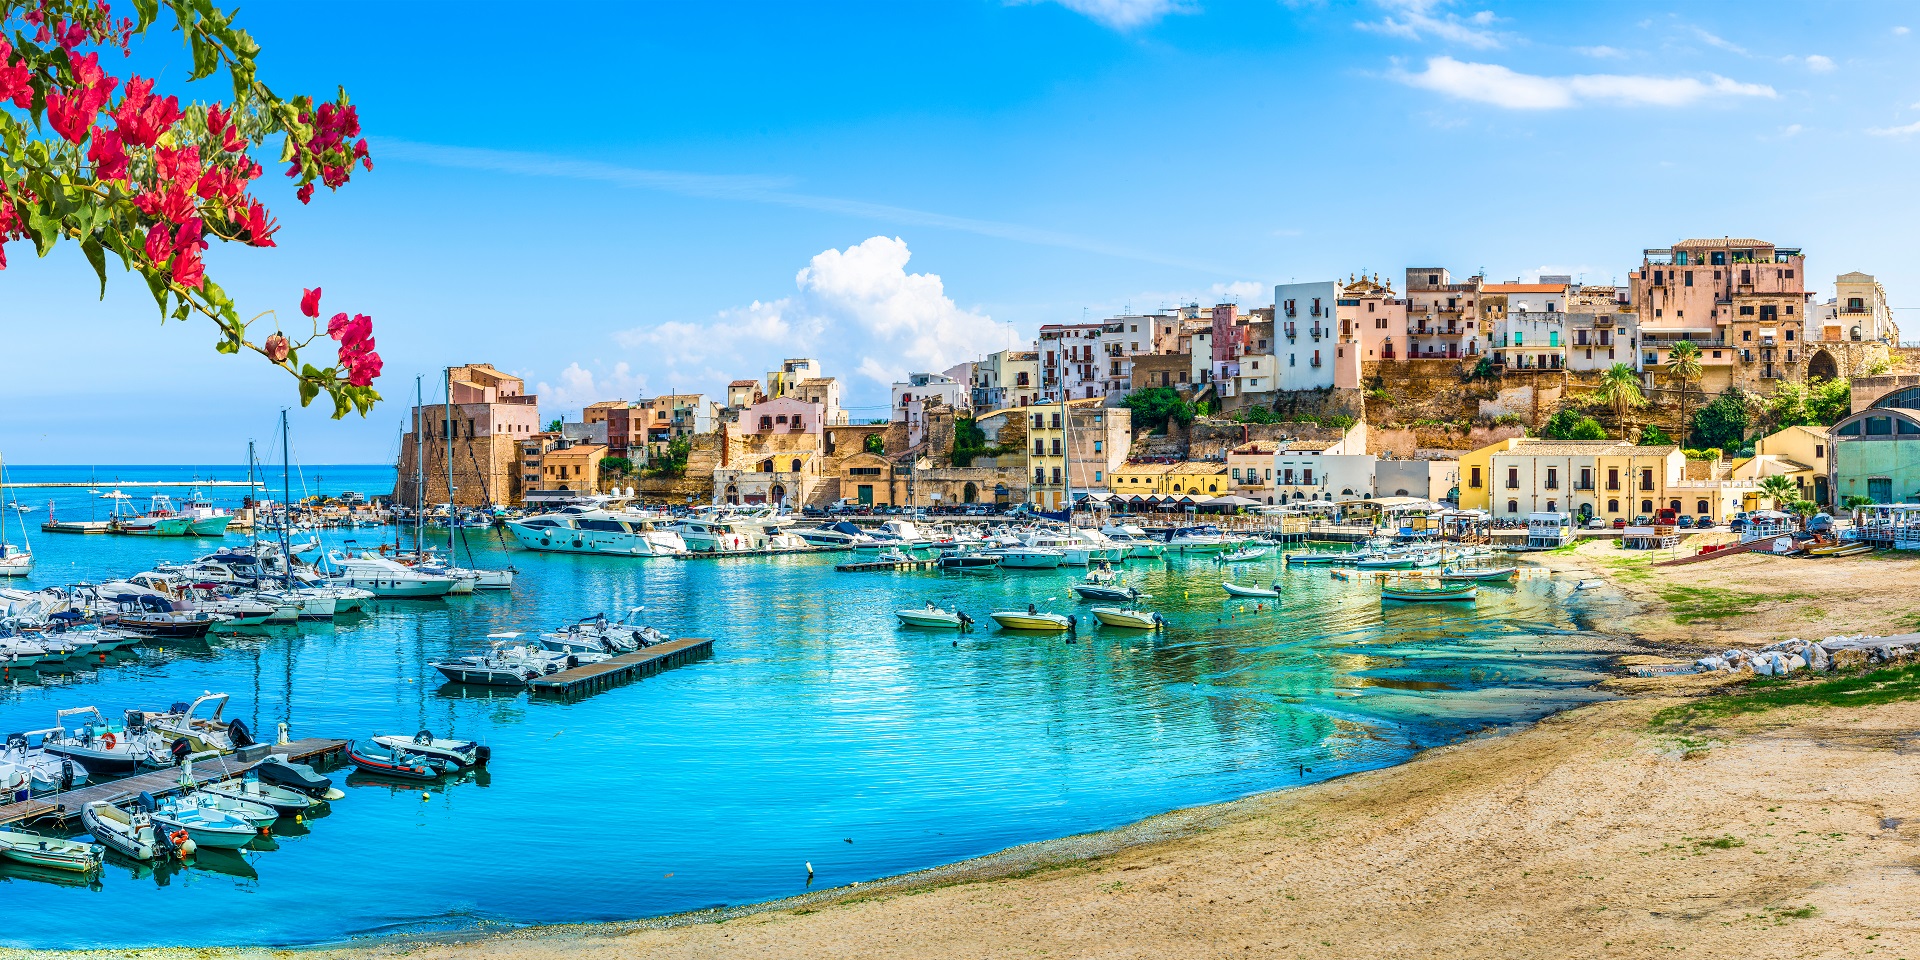 Port of Castellammare del Golfo in Sicily, Italy